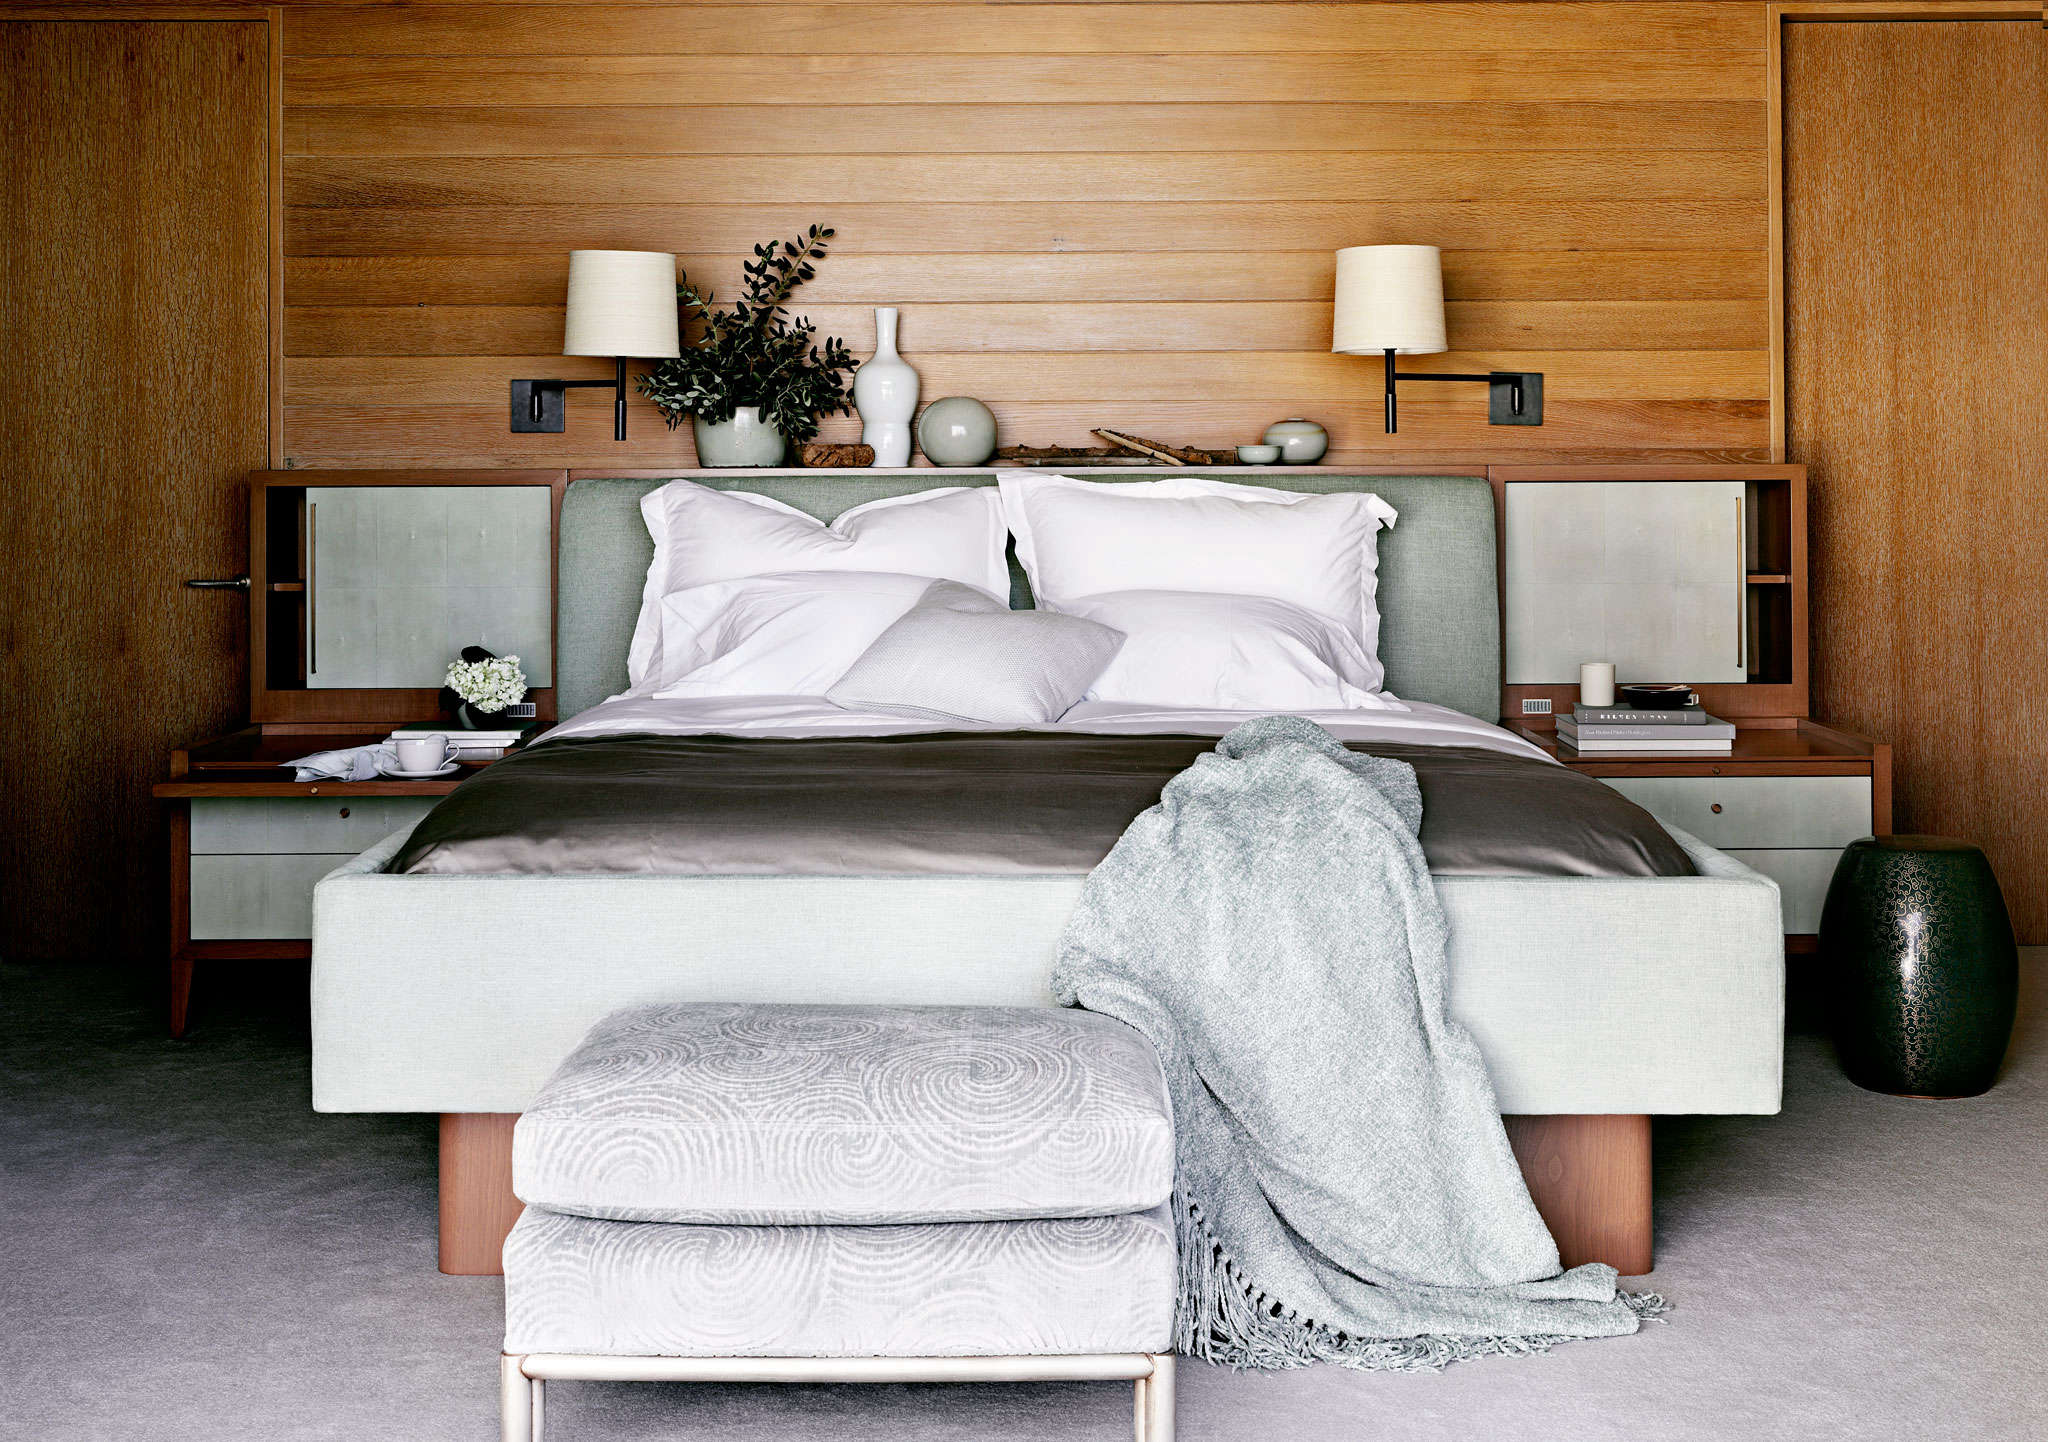 wood paneled romantic bedroom designed by barbara barry | remodelista 16